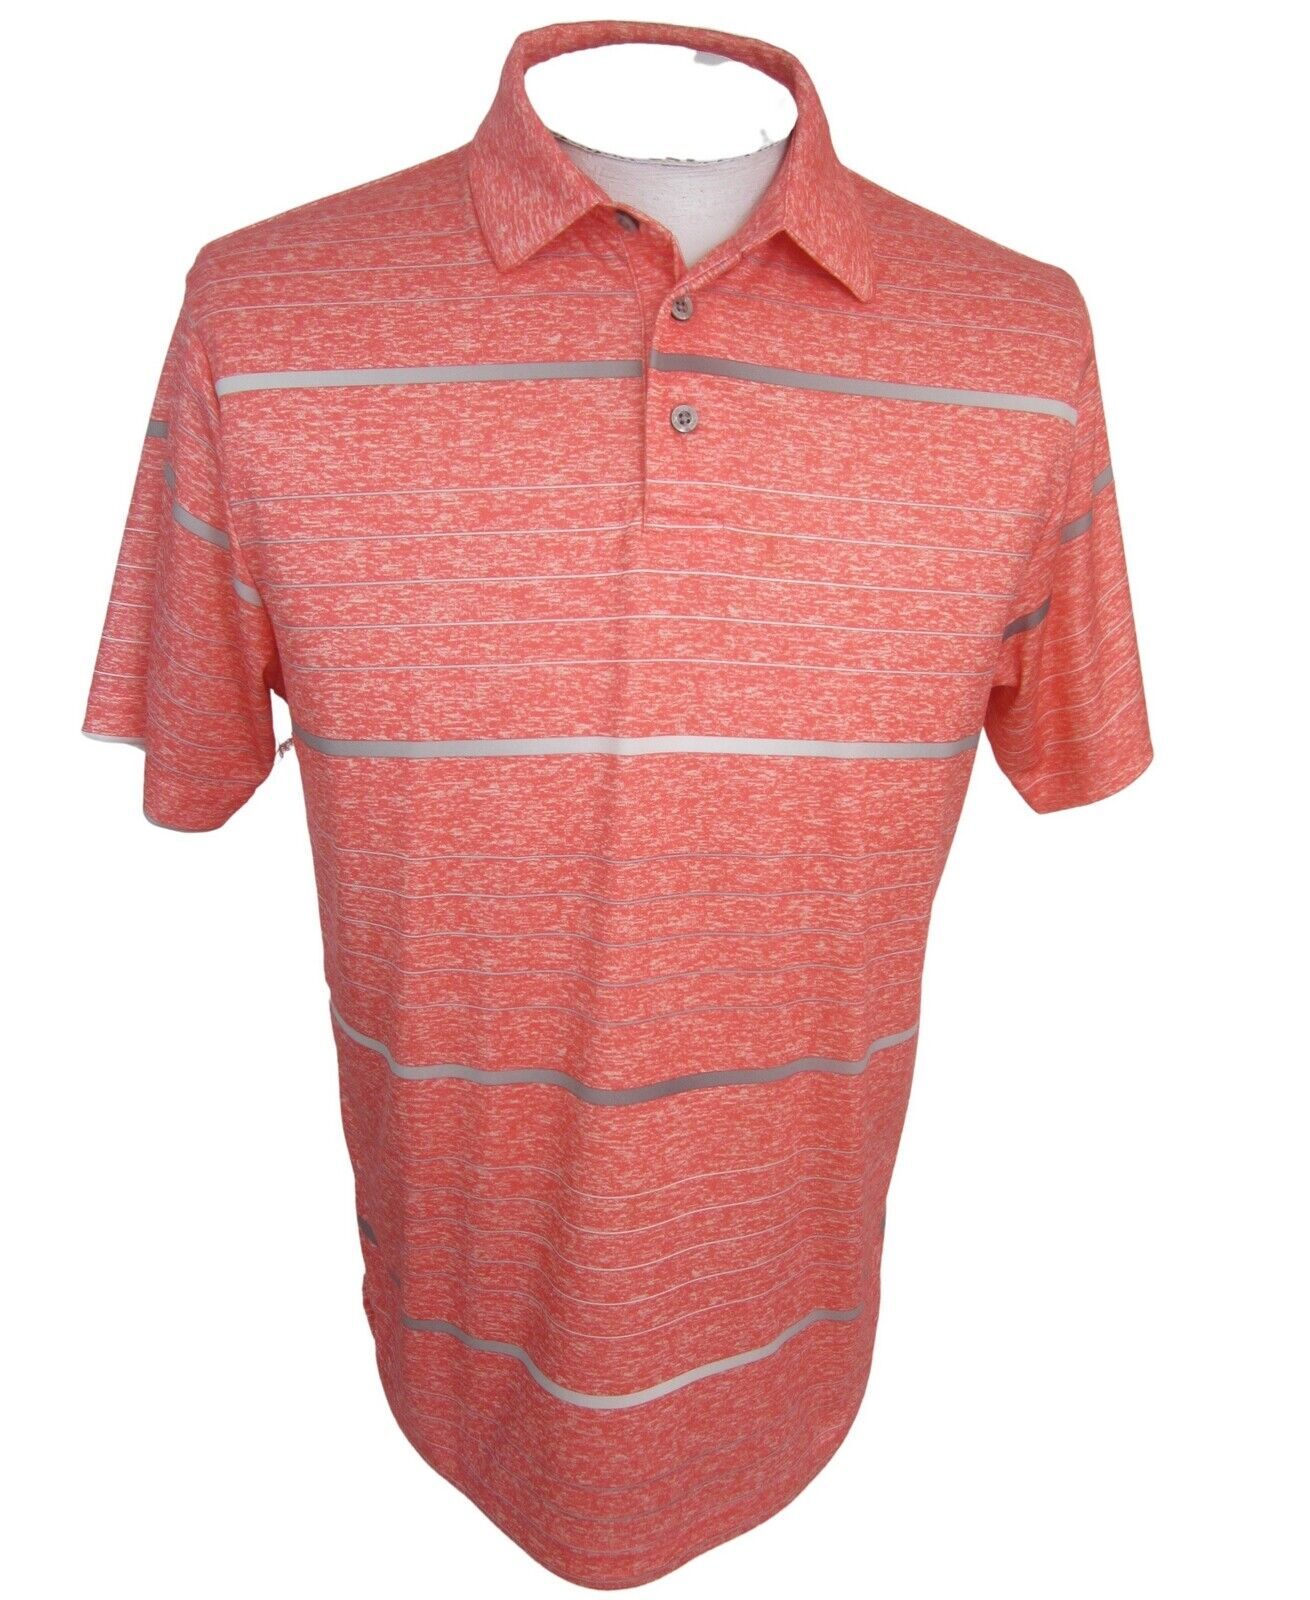 Primary image for PGA Tour Men Polo golf shirt pit to pit 22 M salmon pink gray stripe polyester